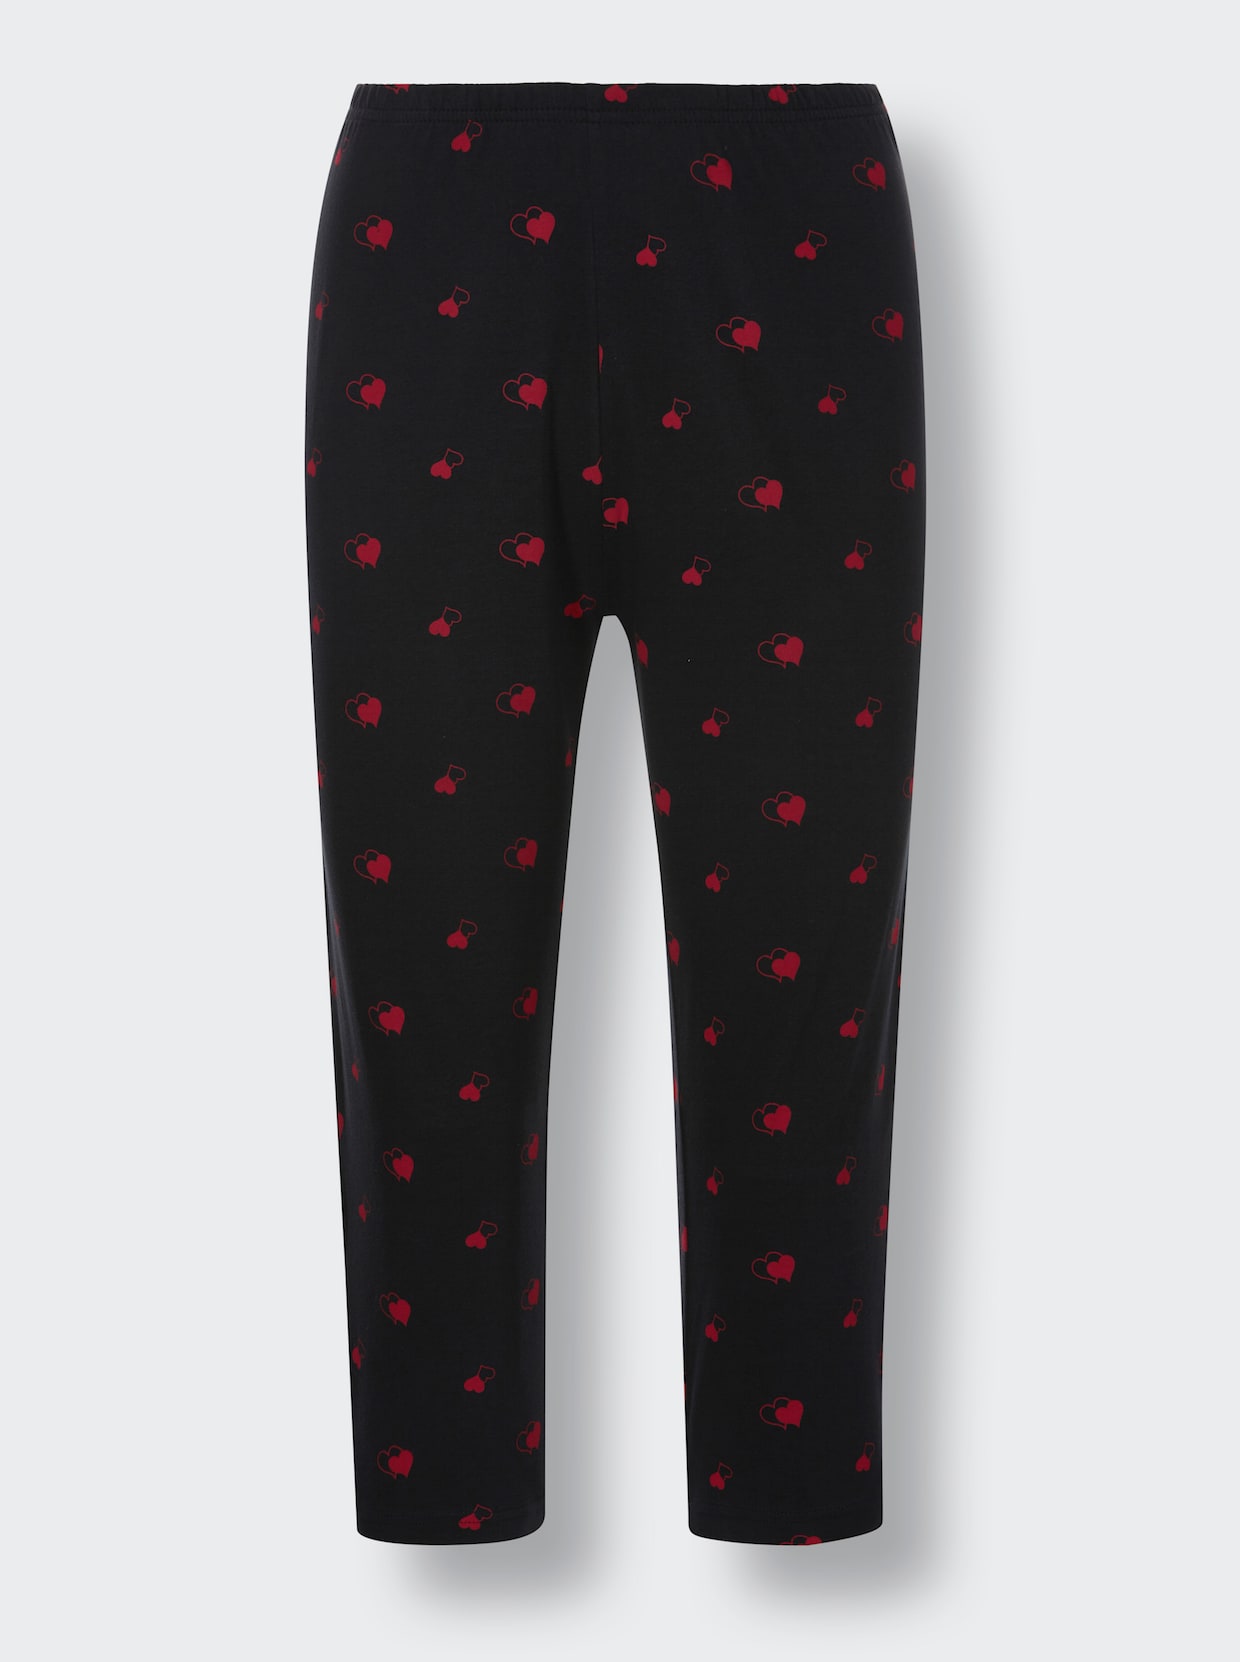 wäschepur Pyjamasset med capribyxor - röd + svart